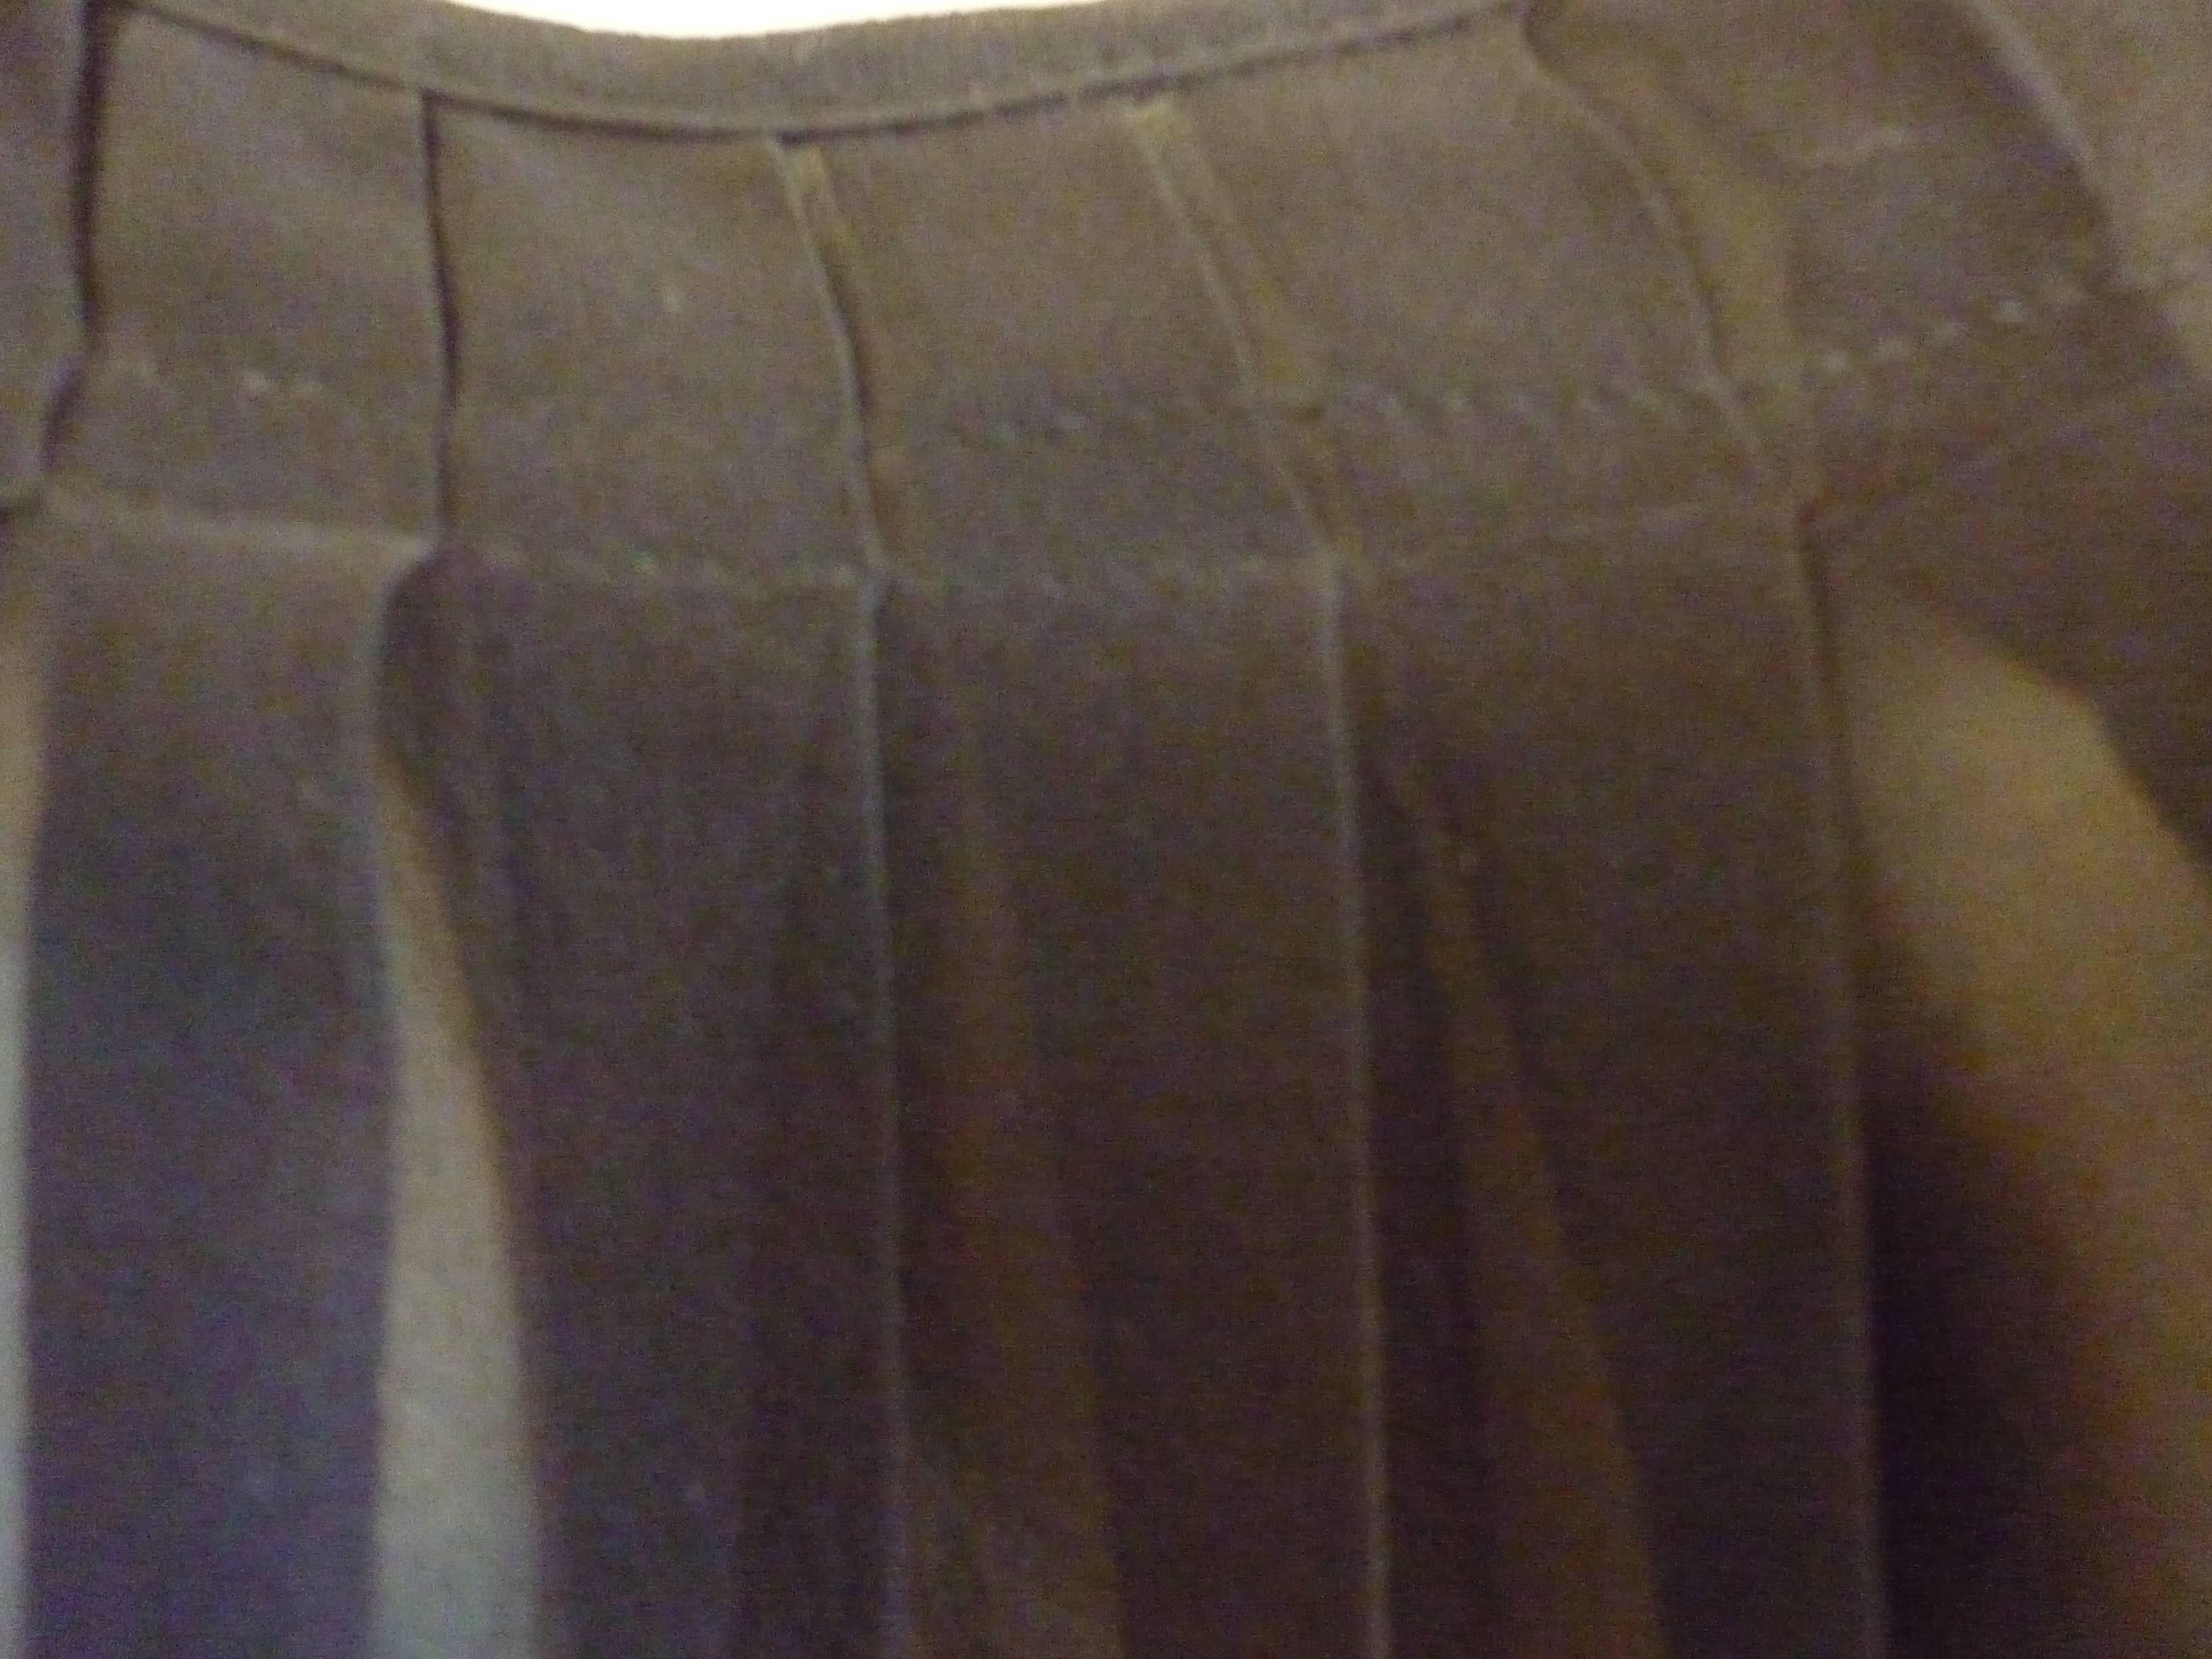 Black Dries Van Noten See-Through and Embellished Silk Top (36)